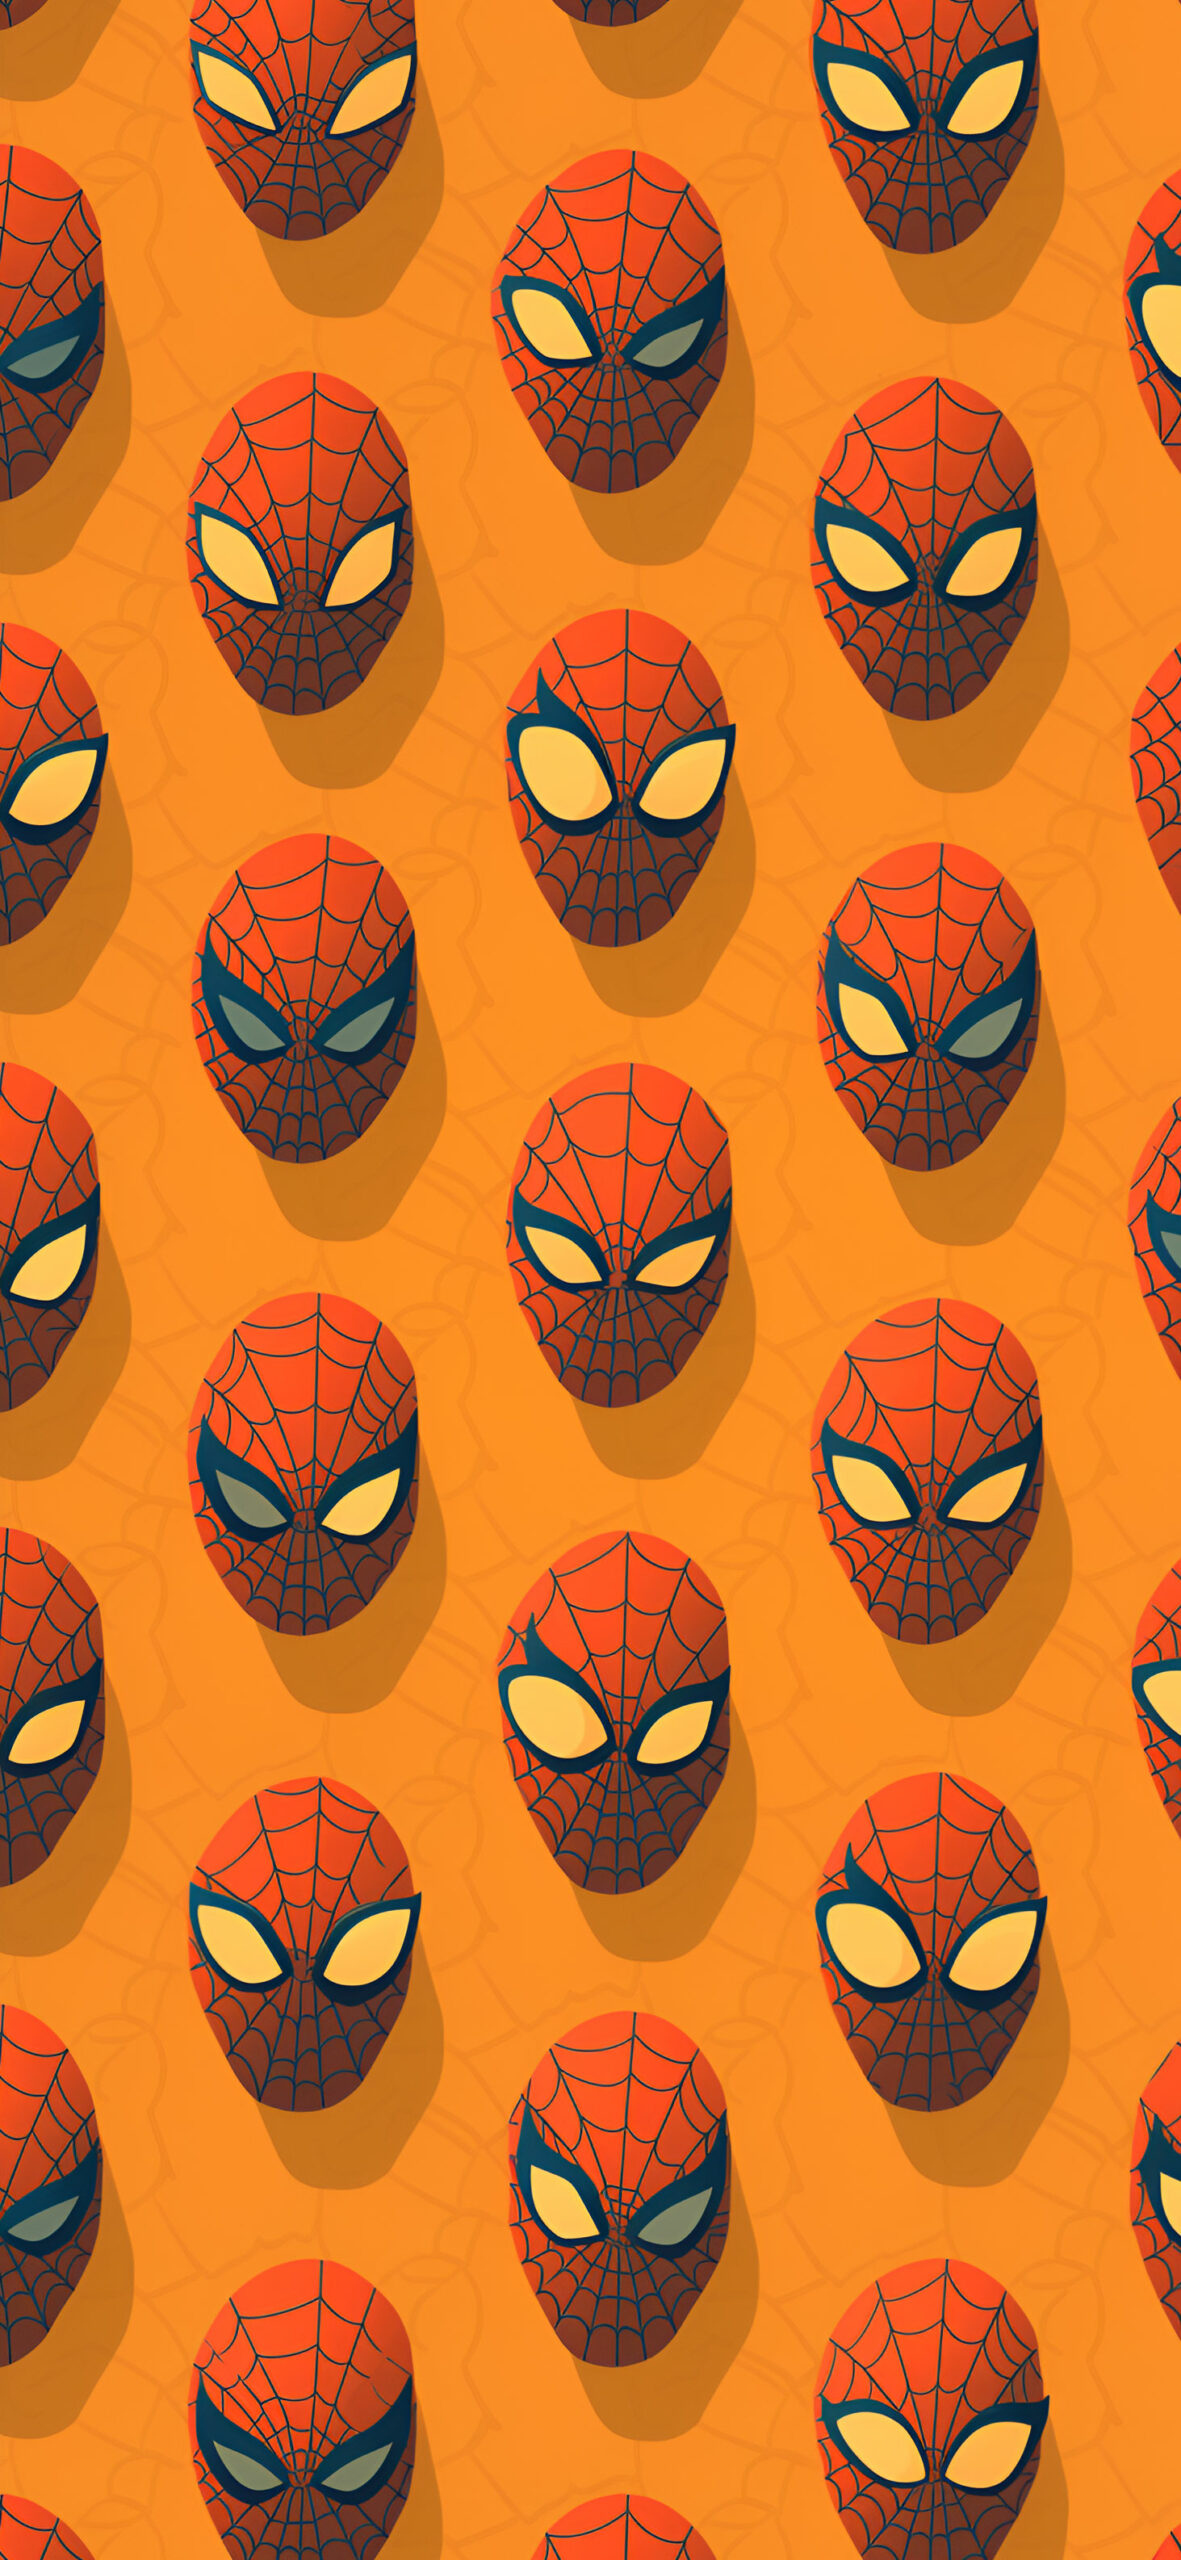 Spider man orange infused pattern wallpaper Marvel aesthetic w